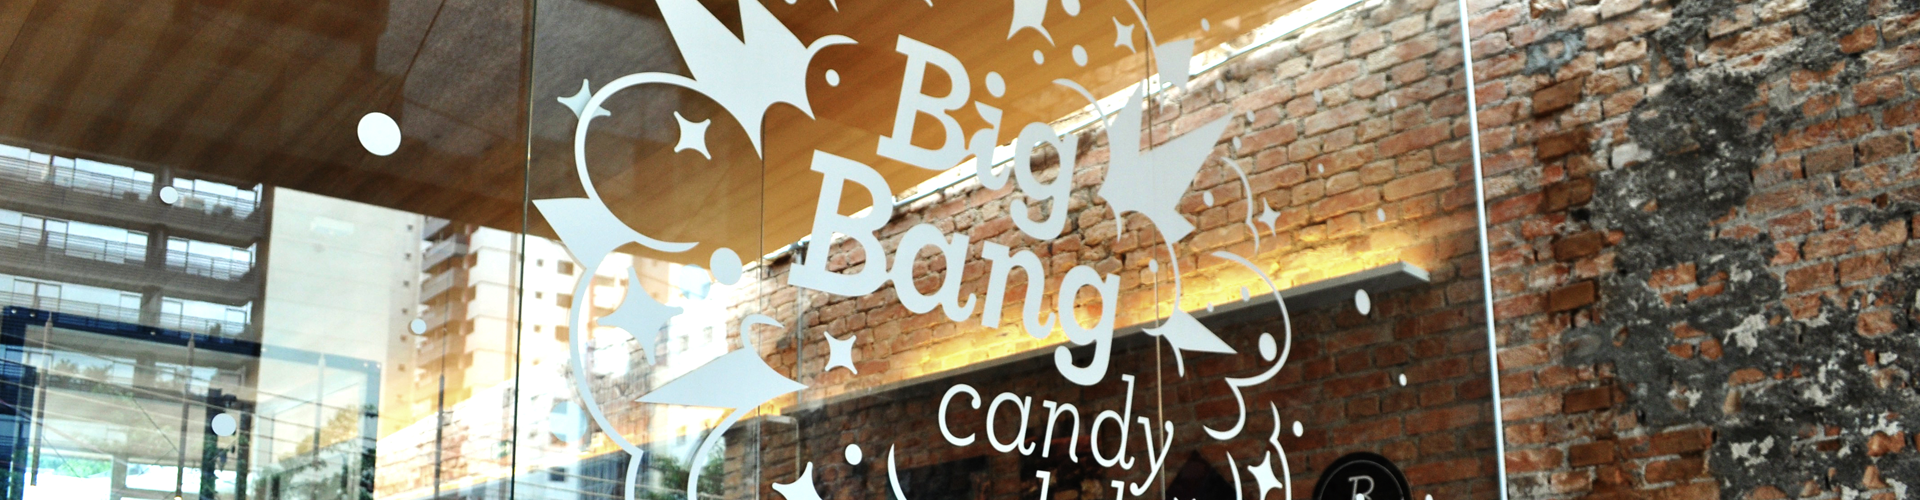 Big Bang Candy Lab